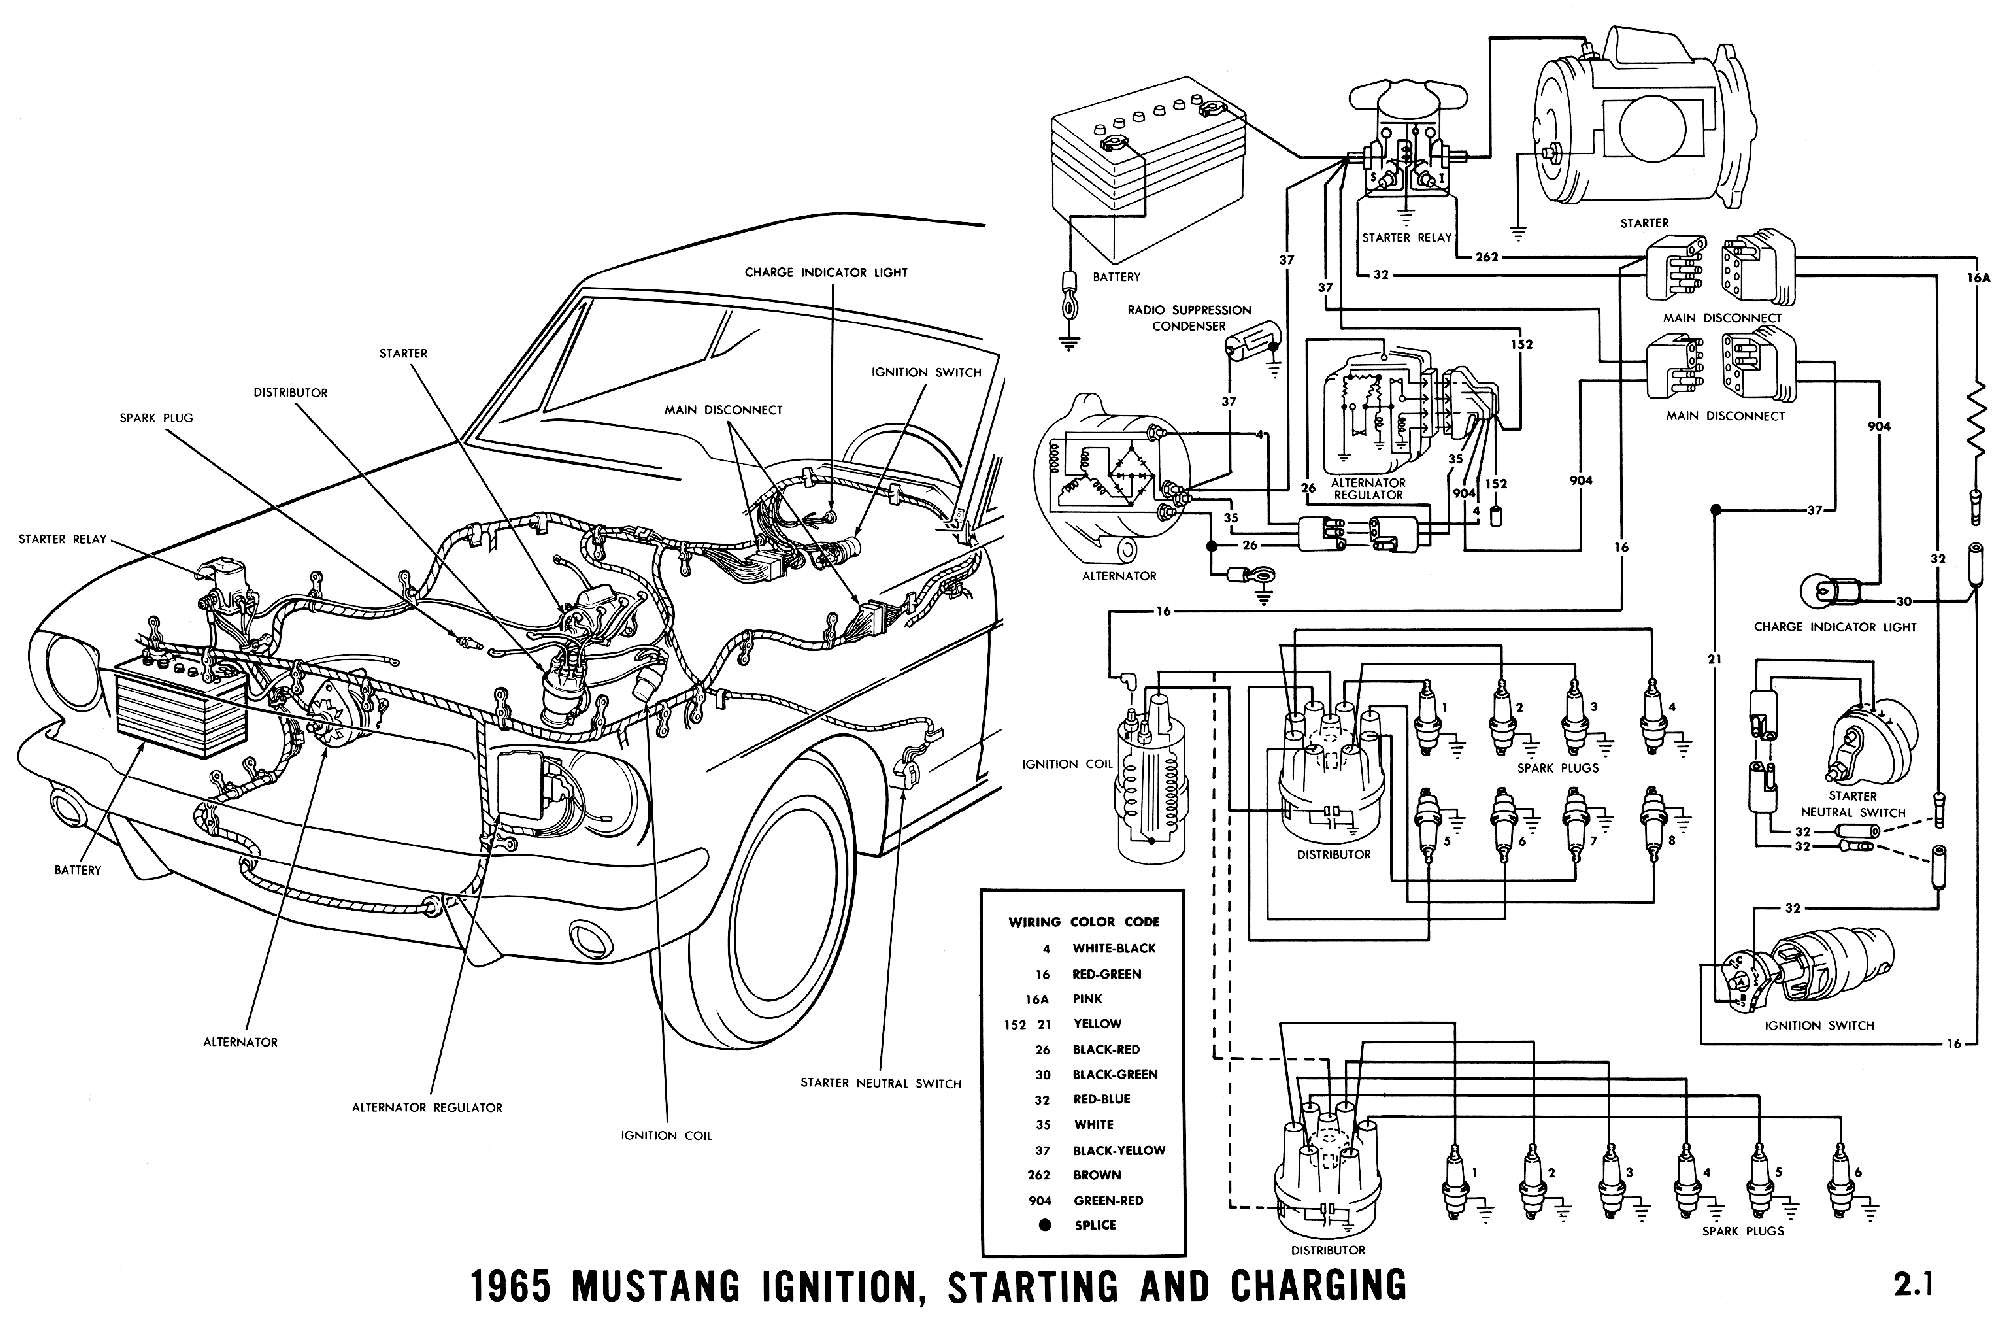 Car Part Diagram 2015 Mustang Engine Diagram Engine Car Parts and Ponent Diagram Of Car Part Diagram